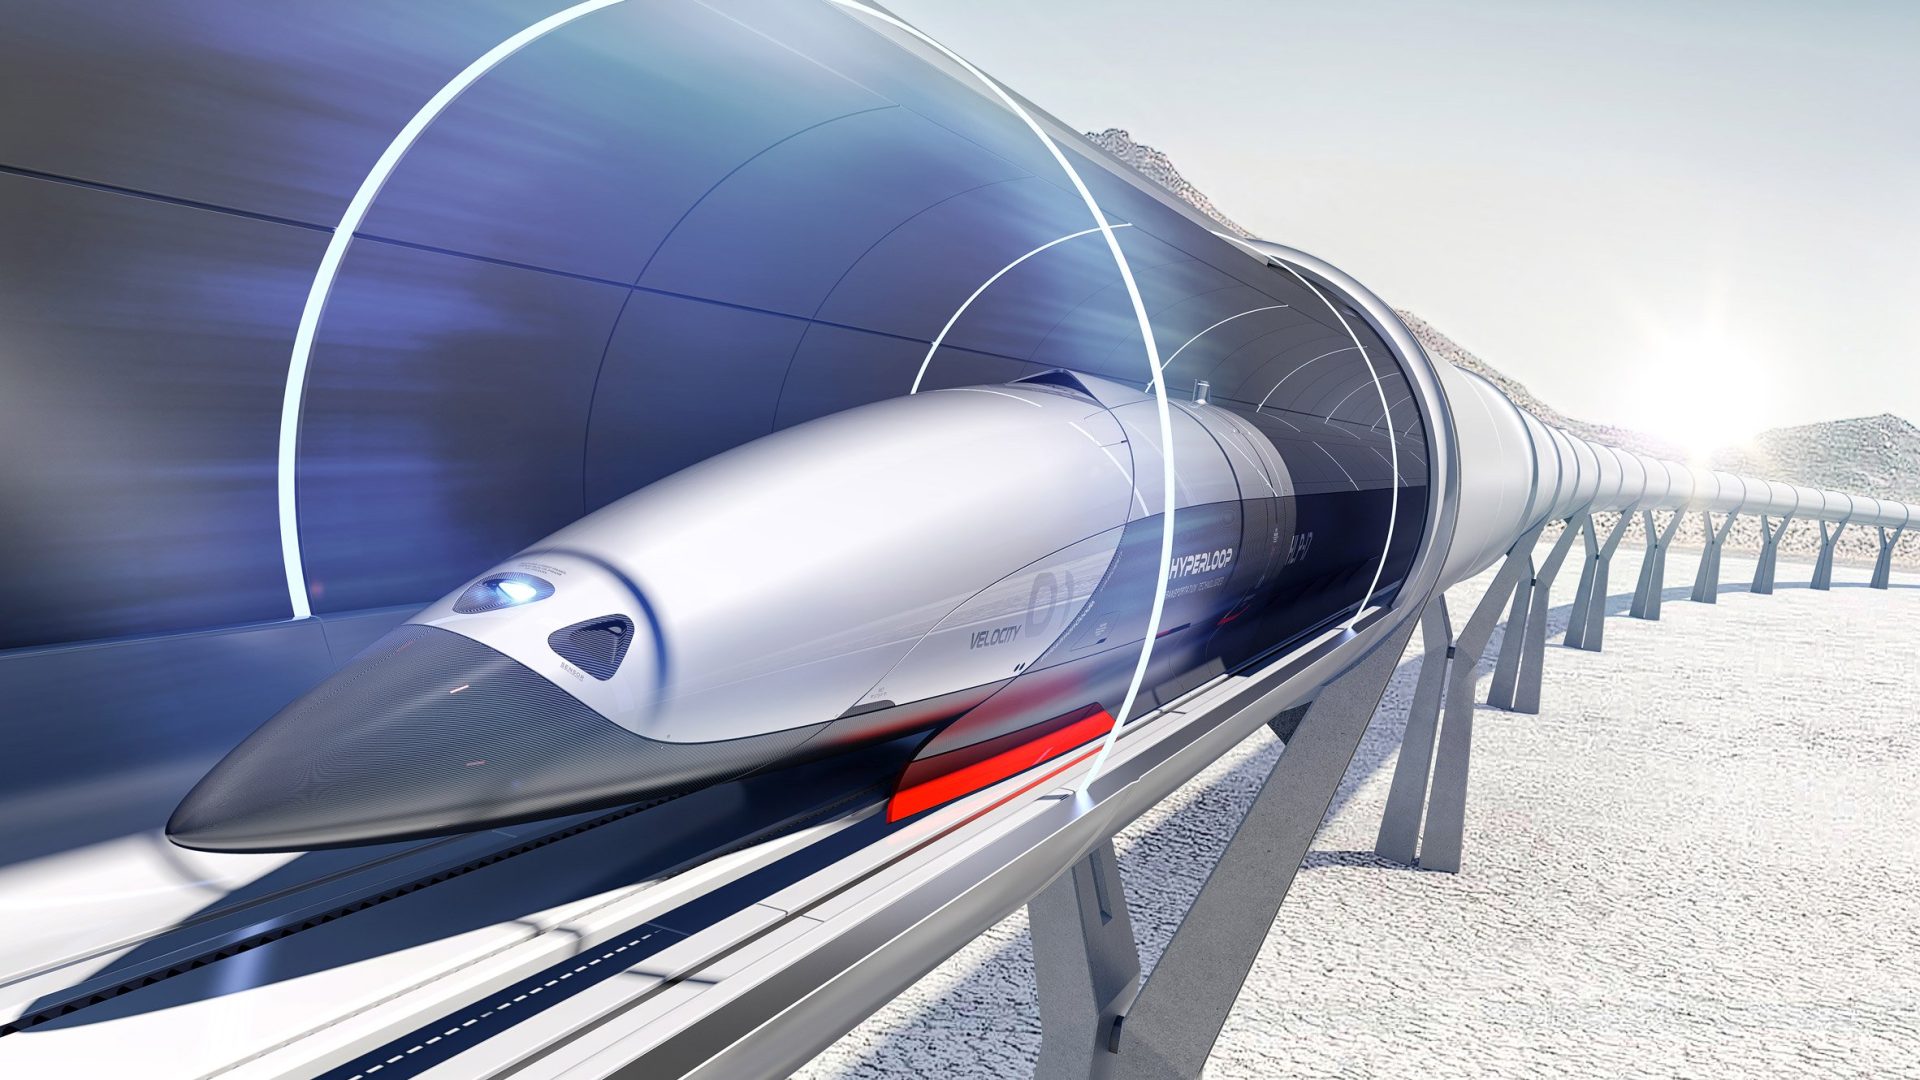 hyperloop transportation technologies designs priestmangoode london design festival dezeen hero 1 نقشه آینده جهان با هایپرلوپ چگونه خواهد بود؟